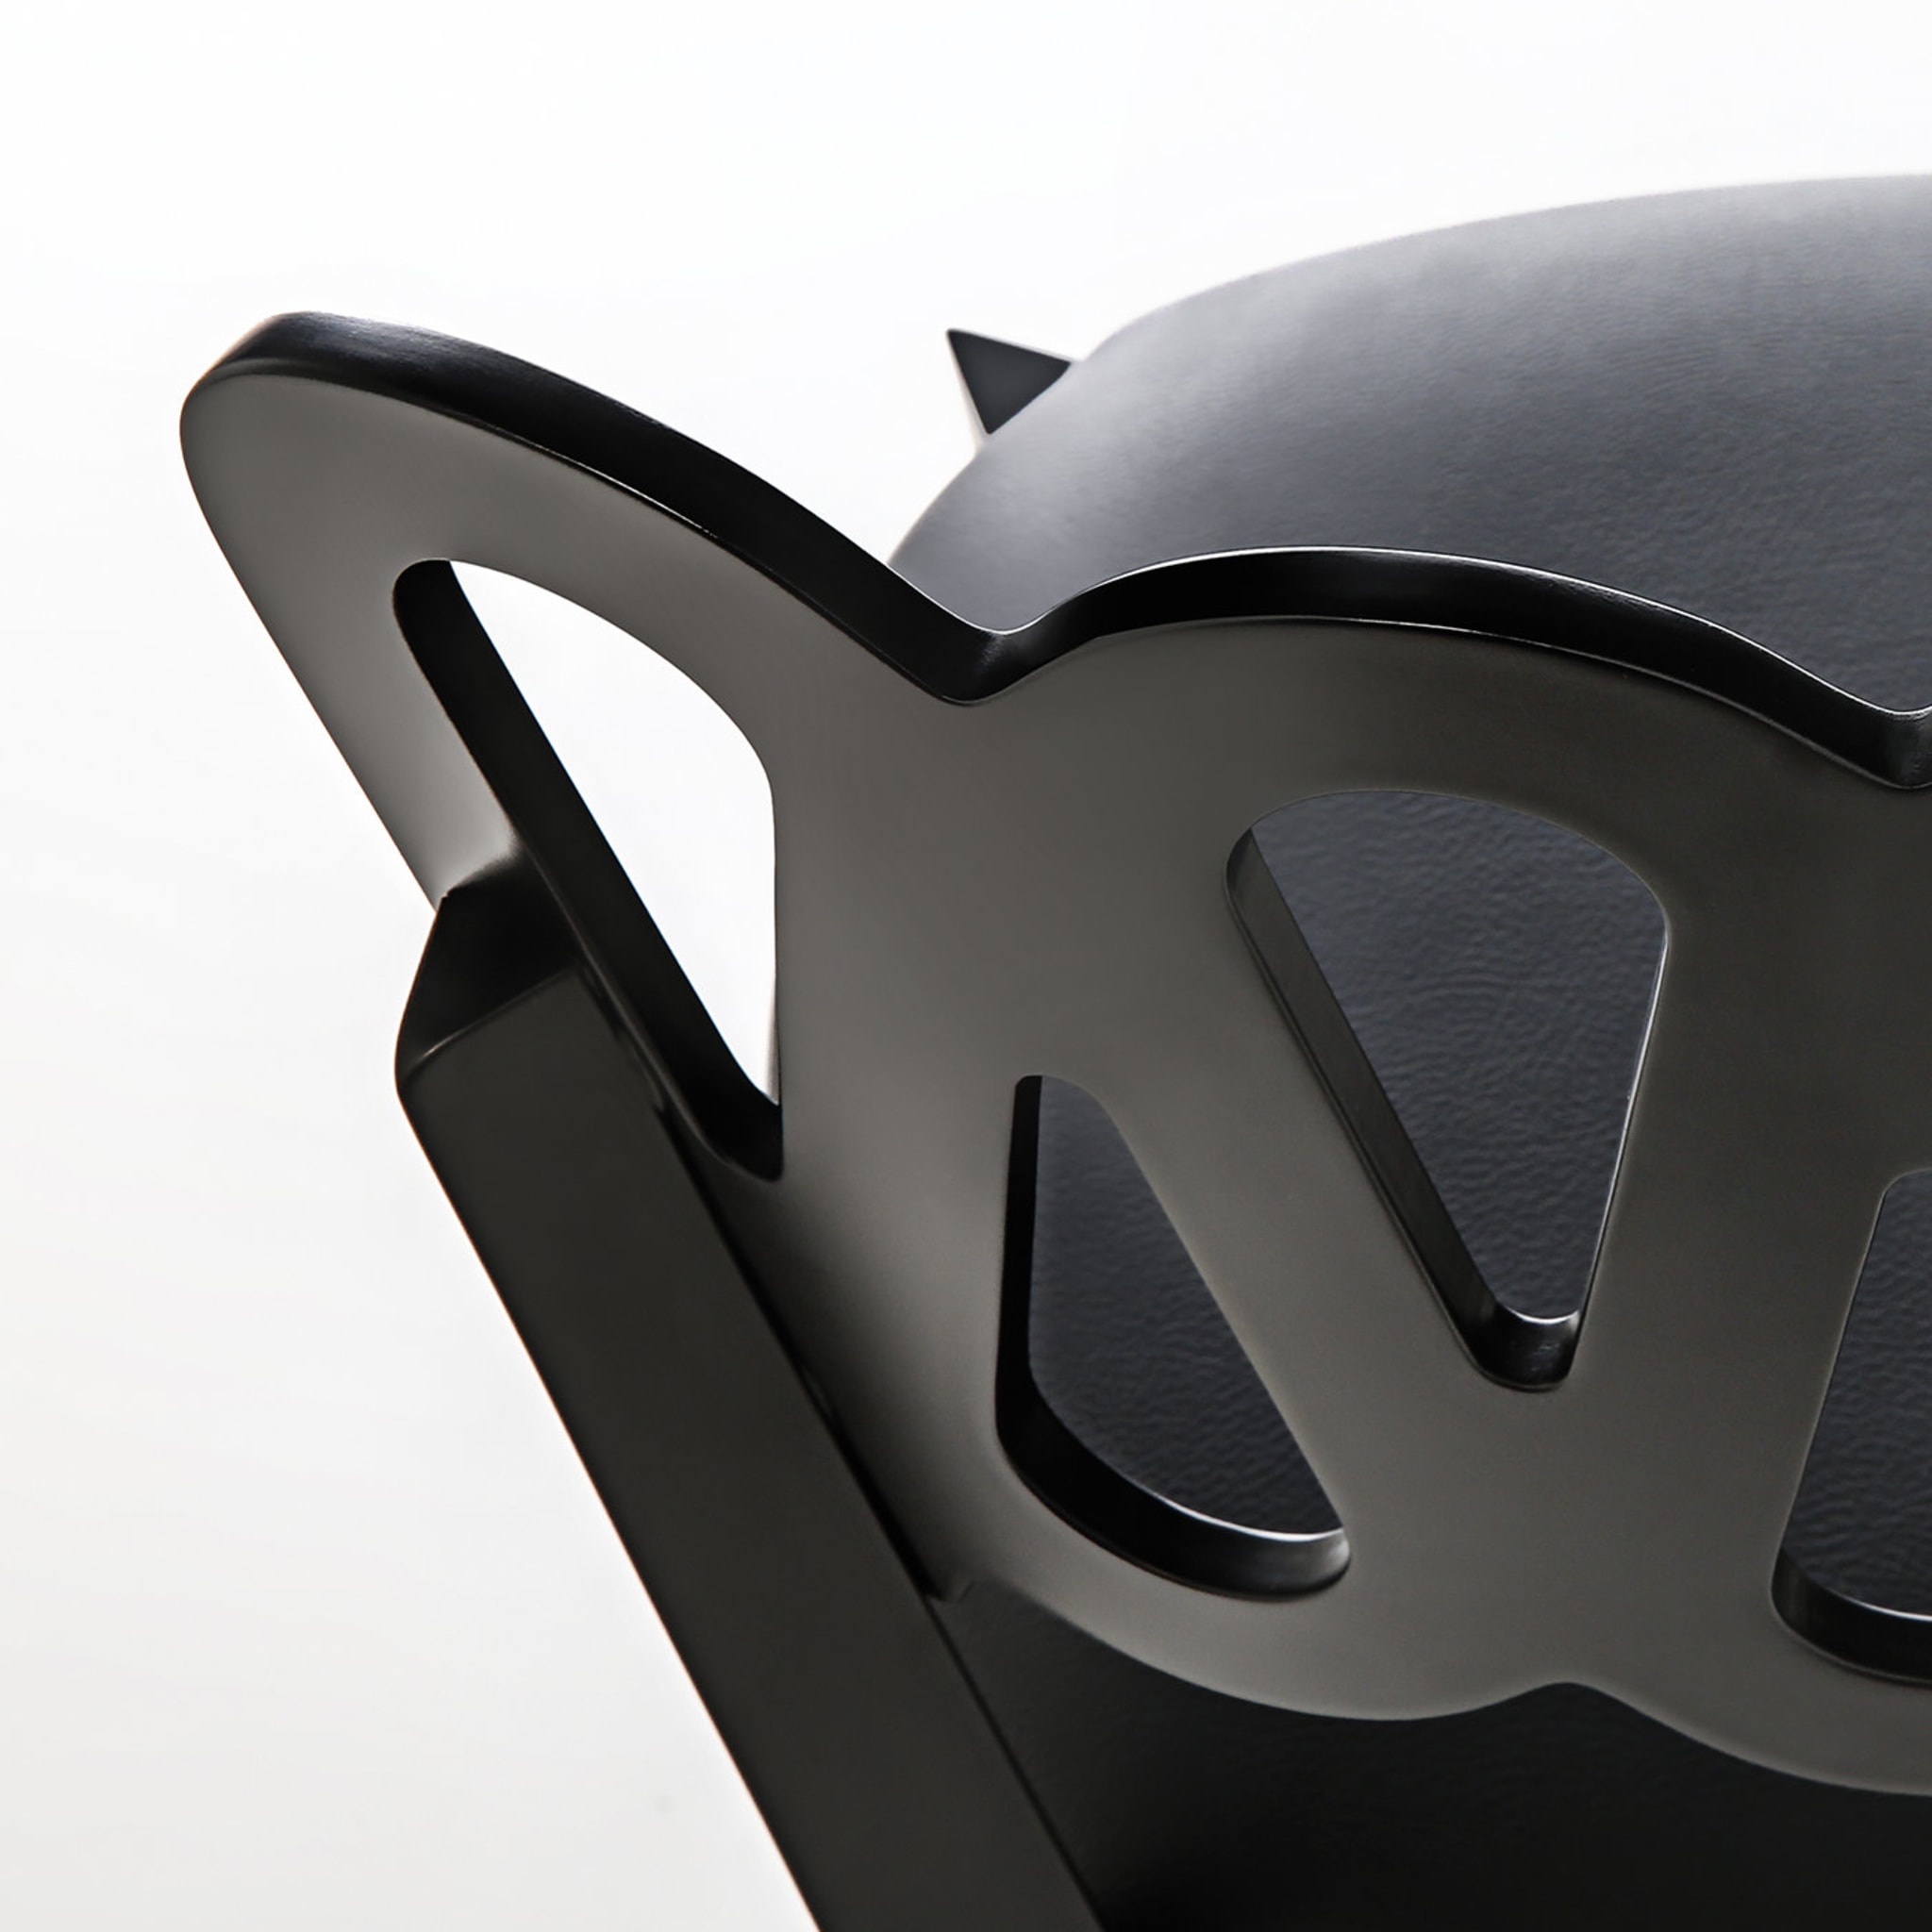 Ponti 969 Black Leather Chair by Gio Ponti - Alternative view 3